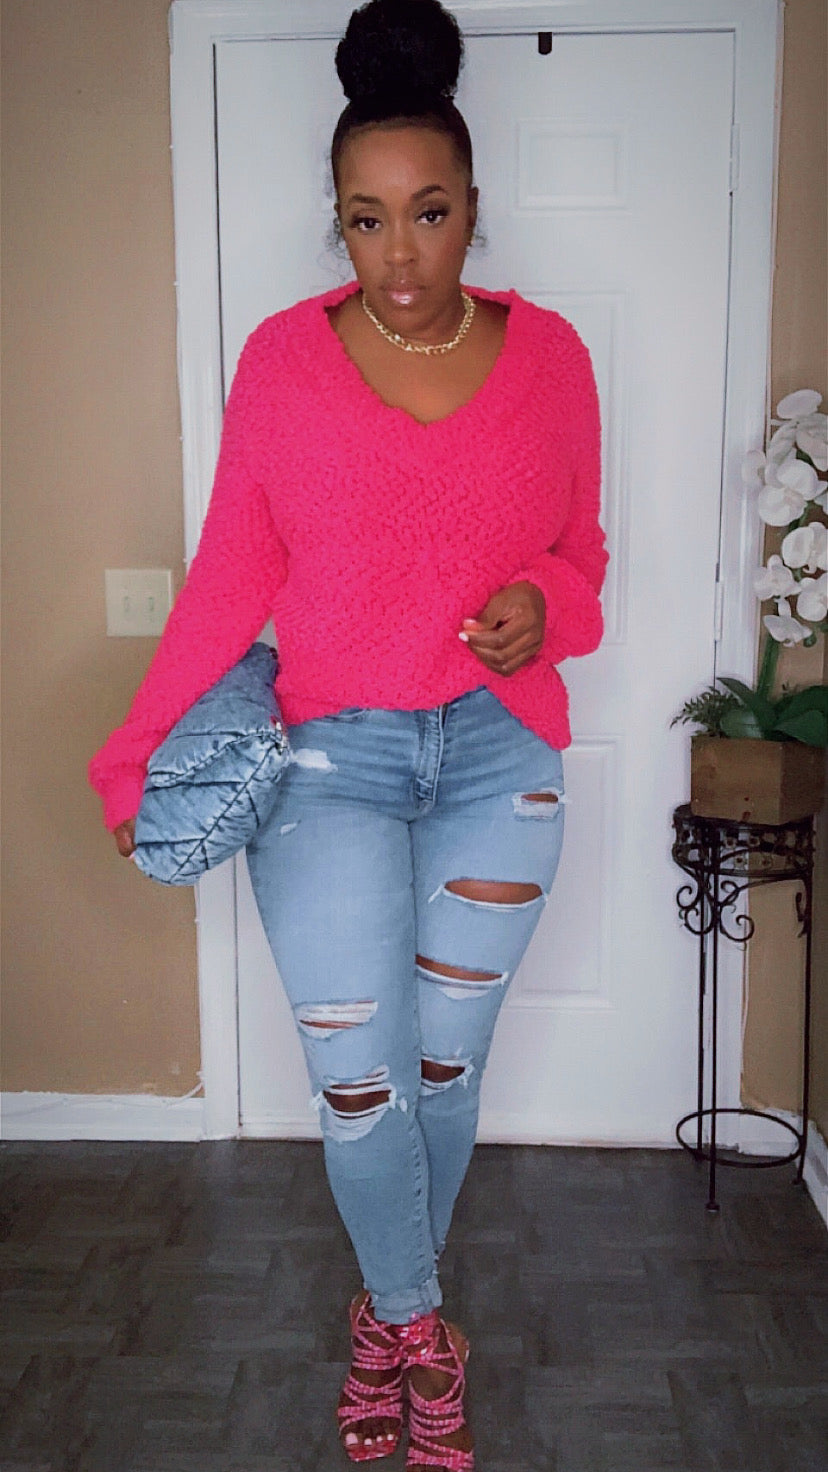 Pretty in Pink Sweater